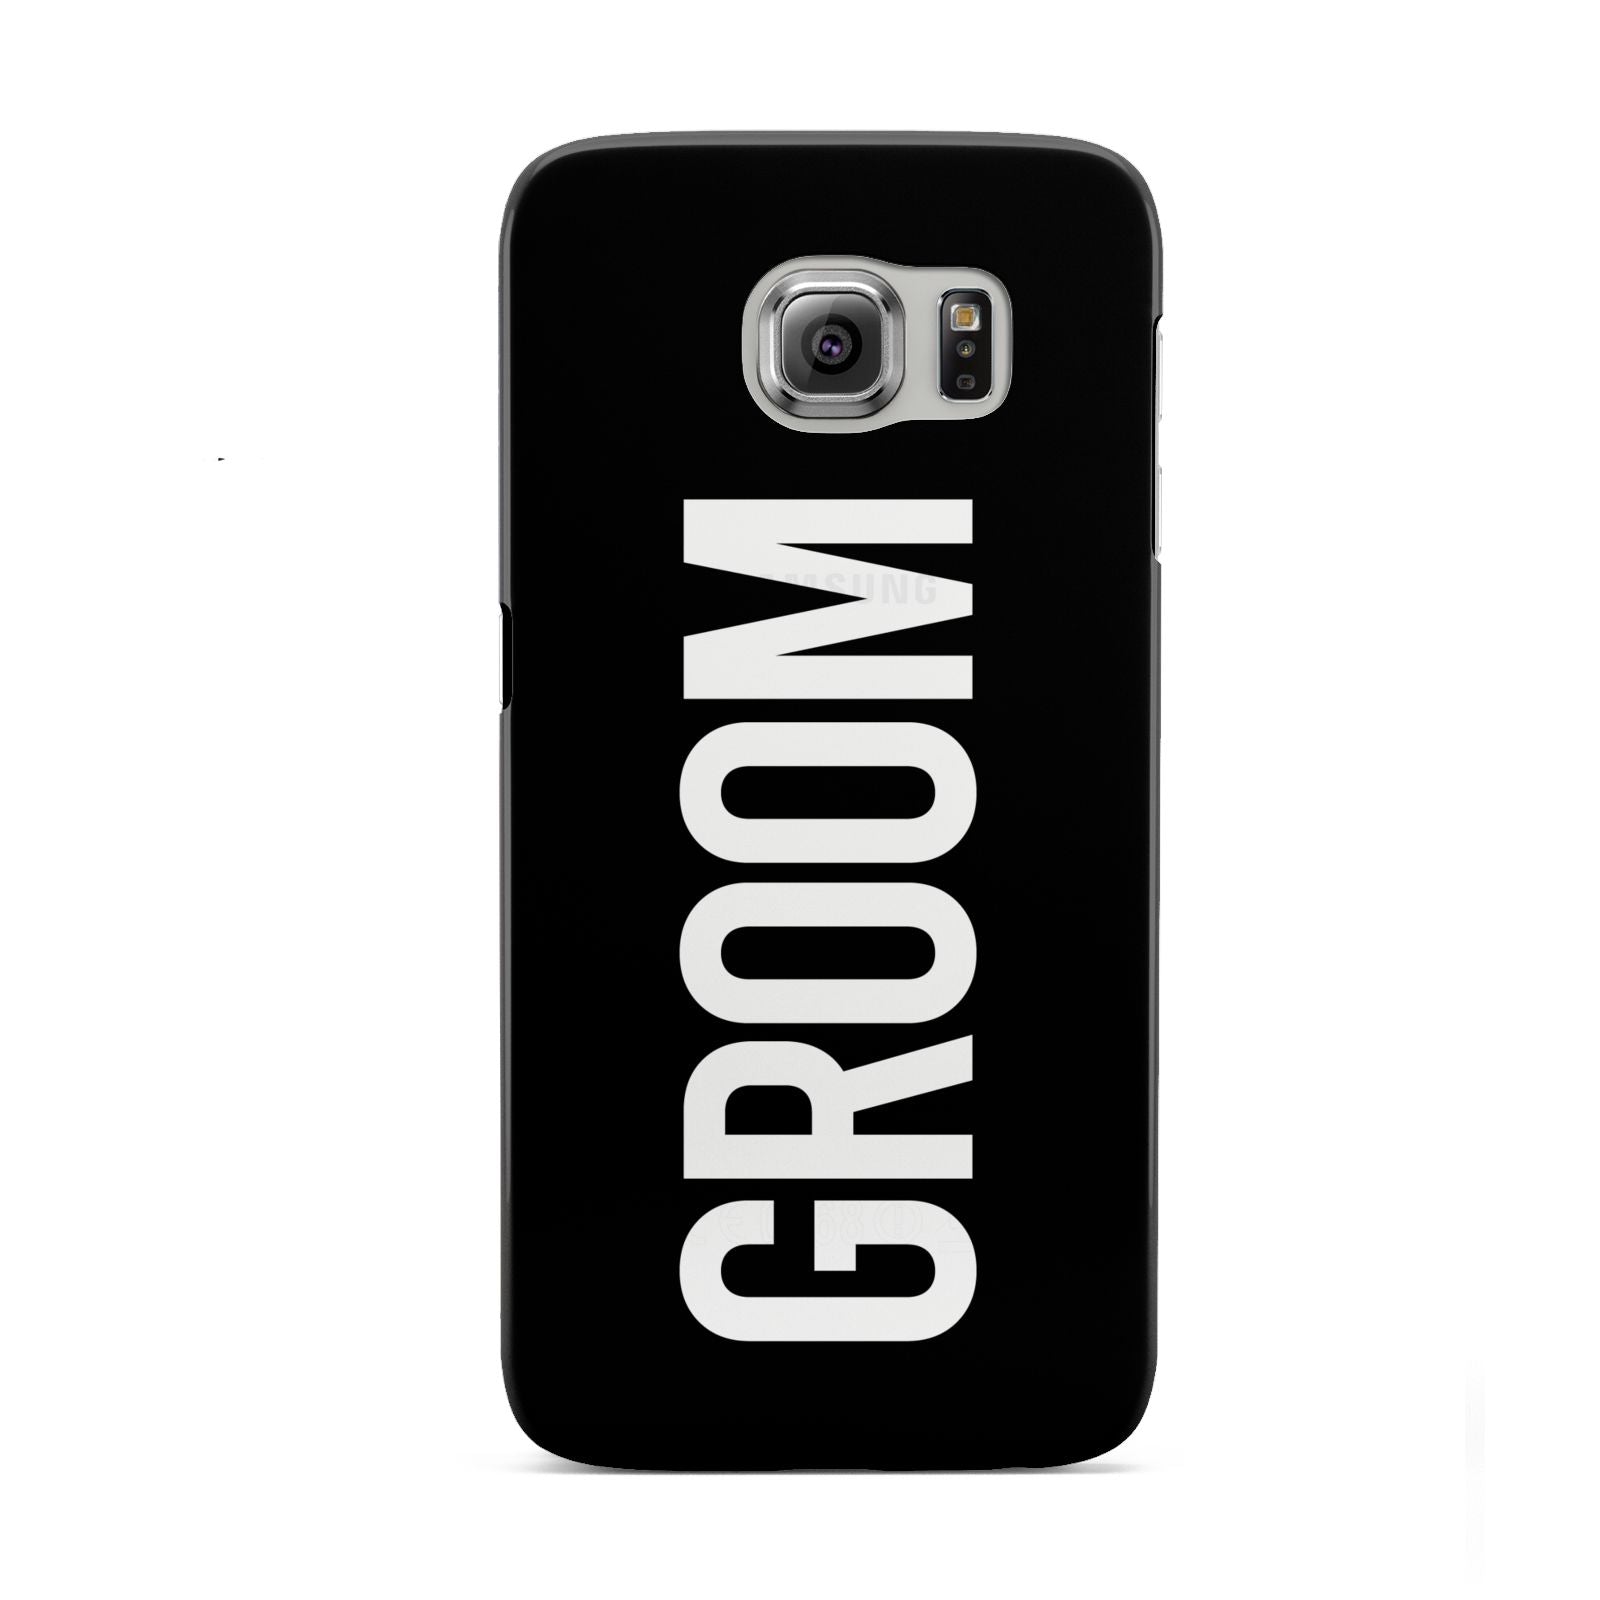 Groom Samsung Galaxy S6 Case